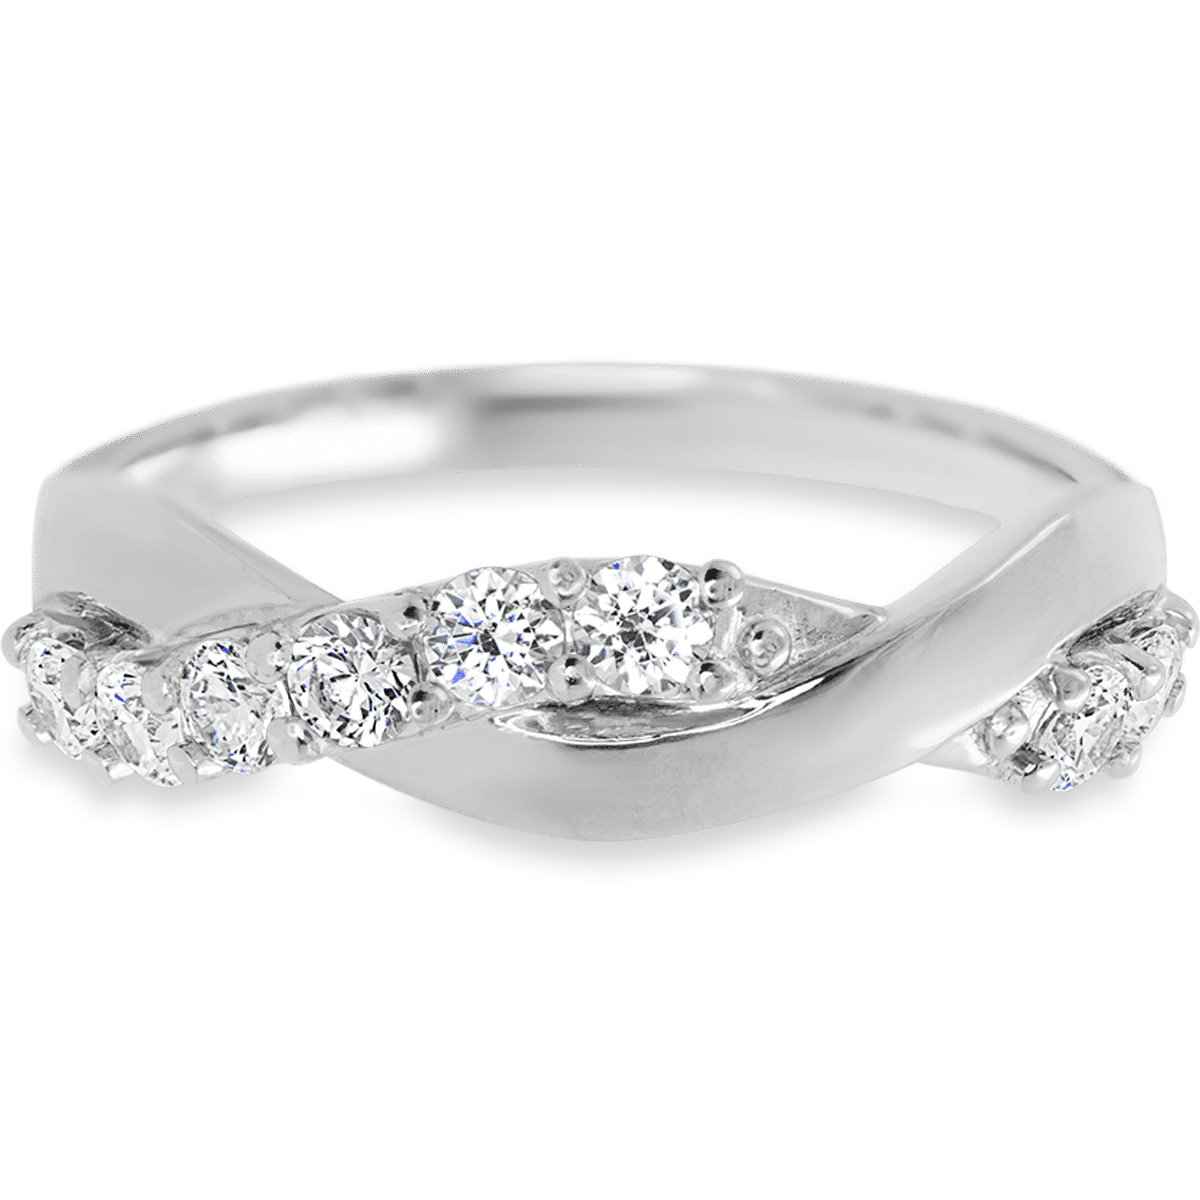 Weaved 14k White Gold + White Diamonds Womens Wedding or Everyday Ring